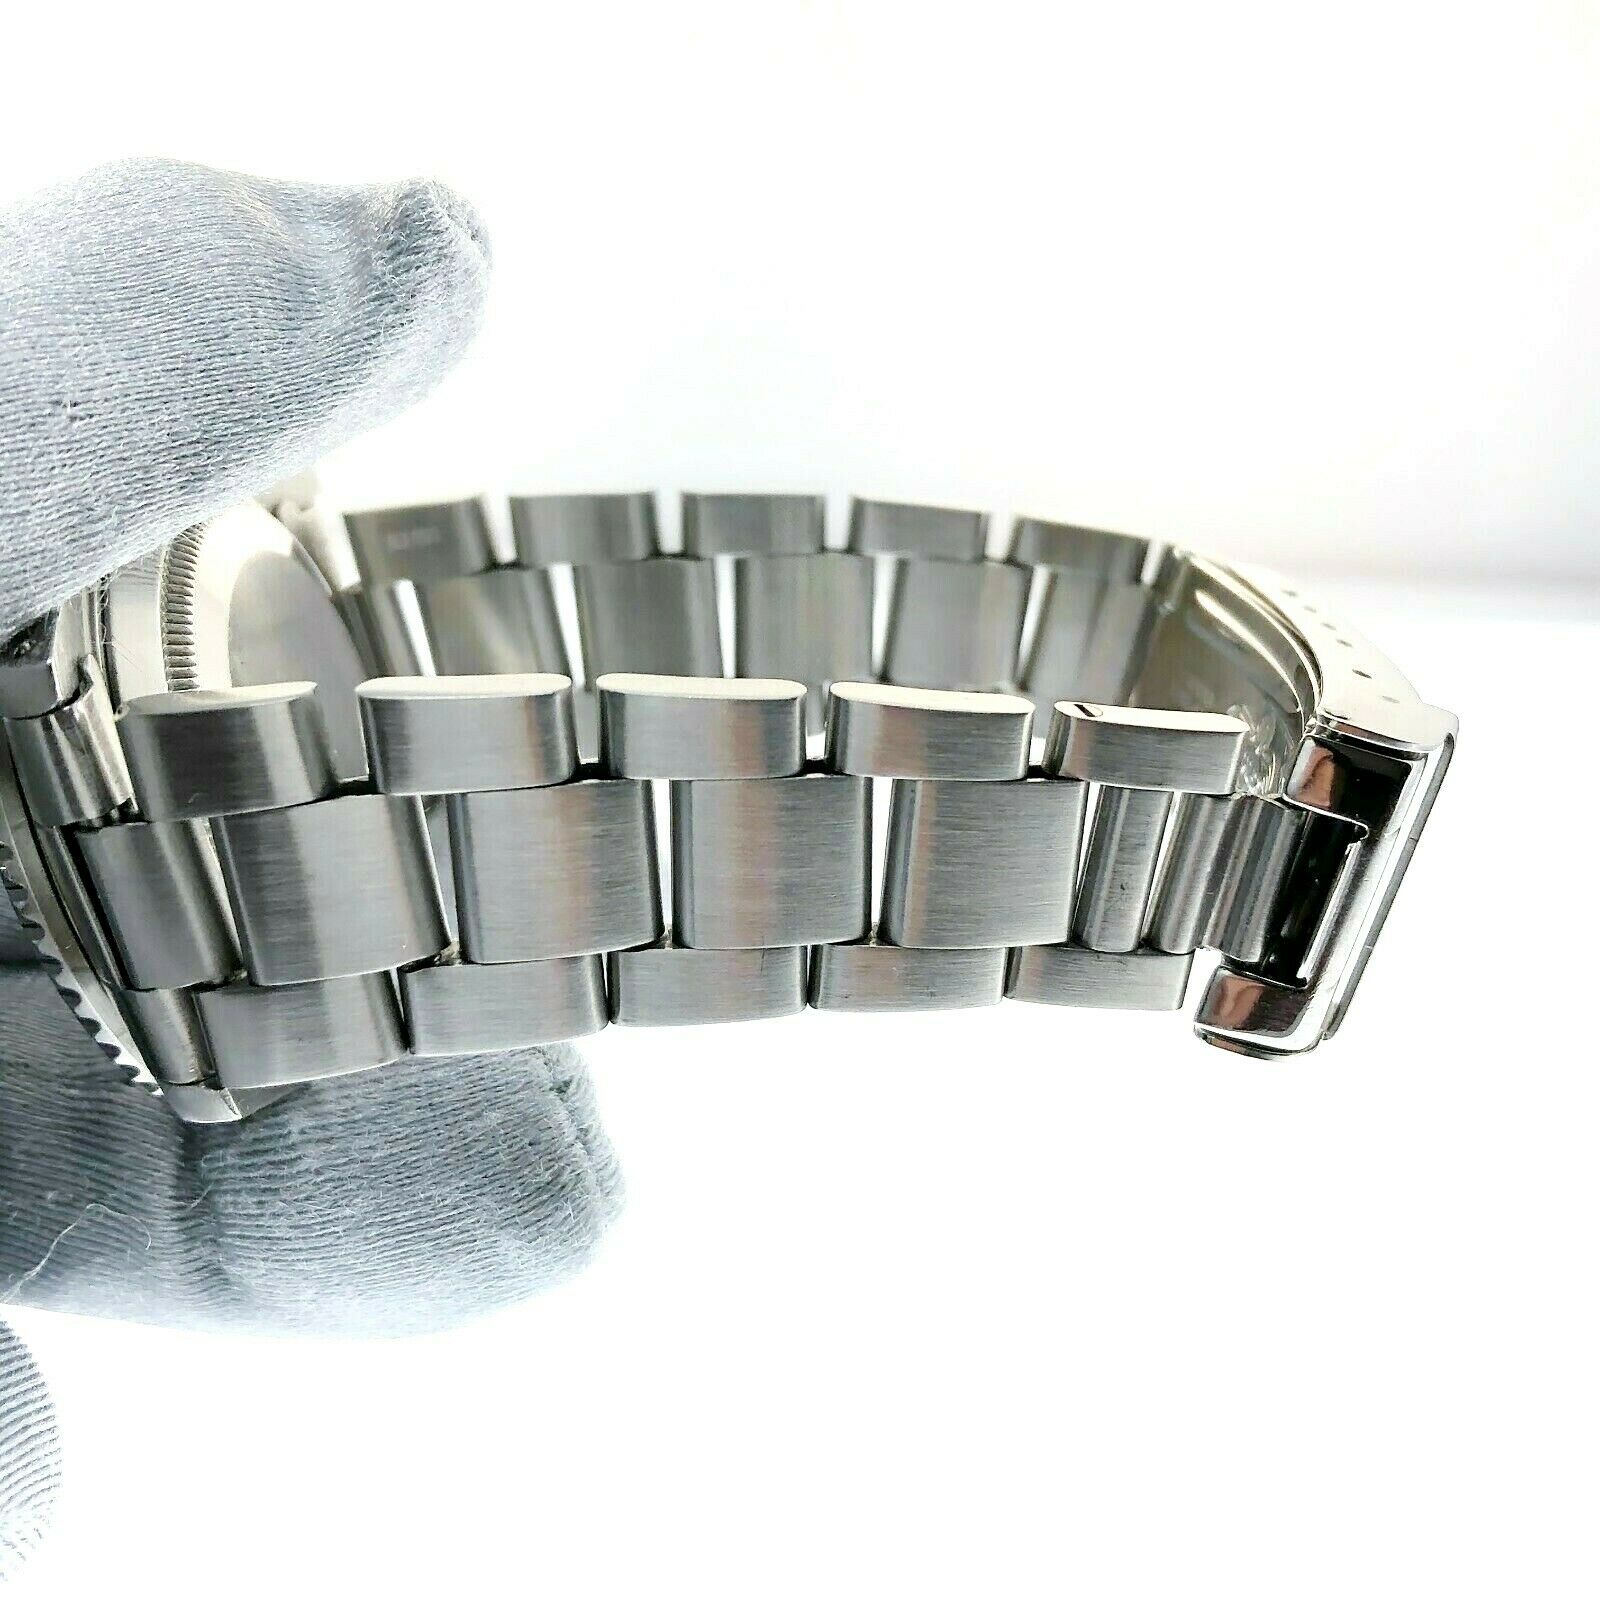 Rolex Black Submariner Date Stainless Steel Watch Ref 16610 Vintage L Serial